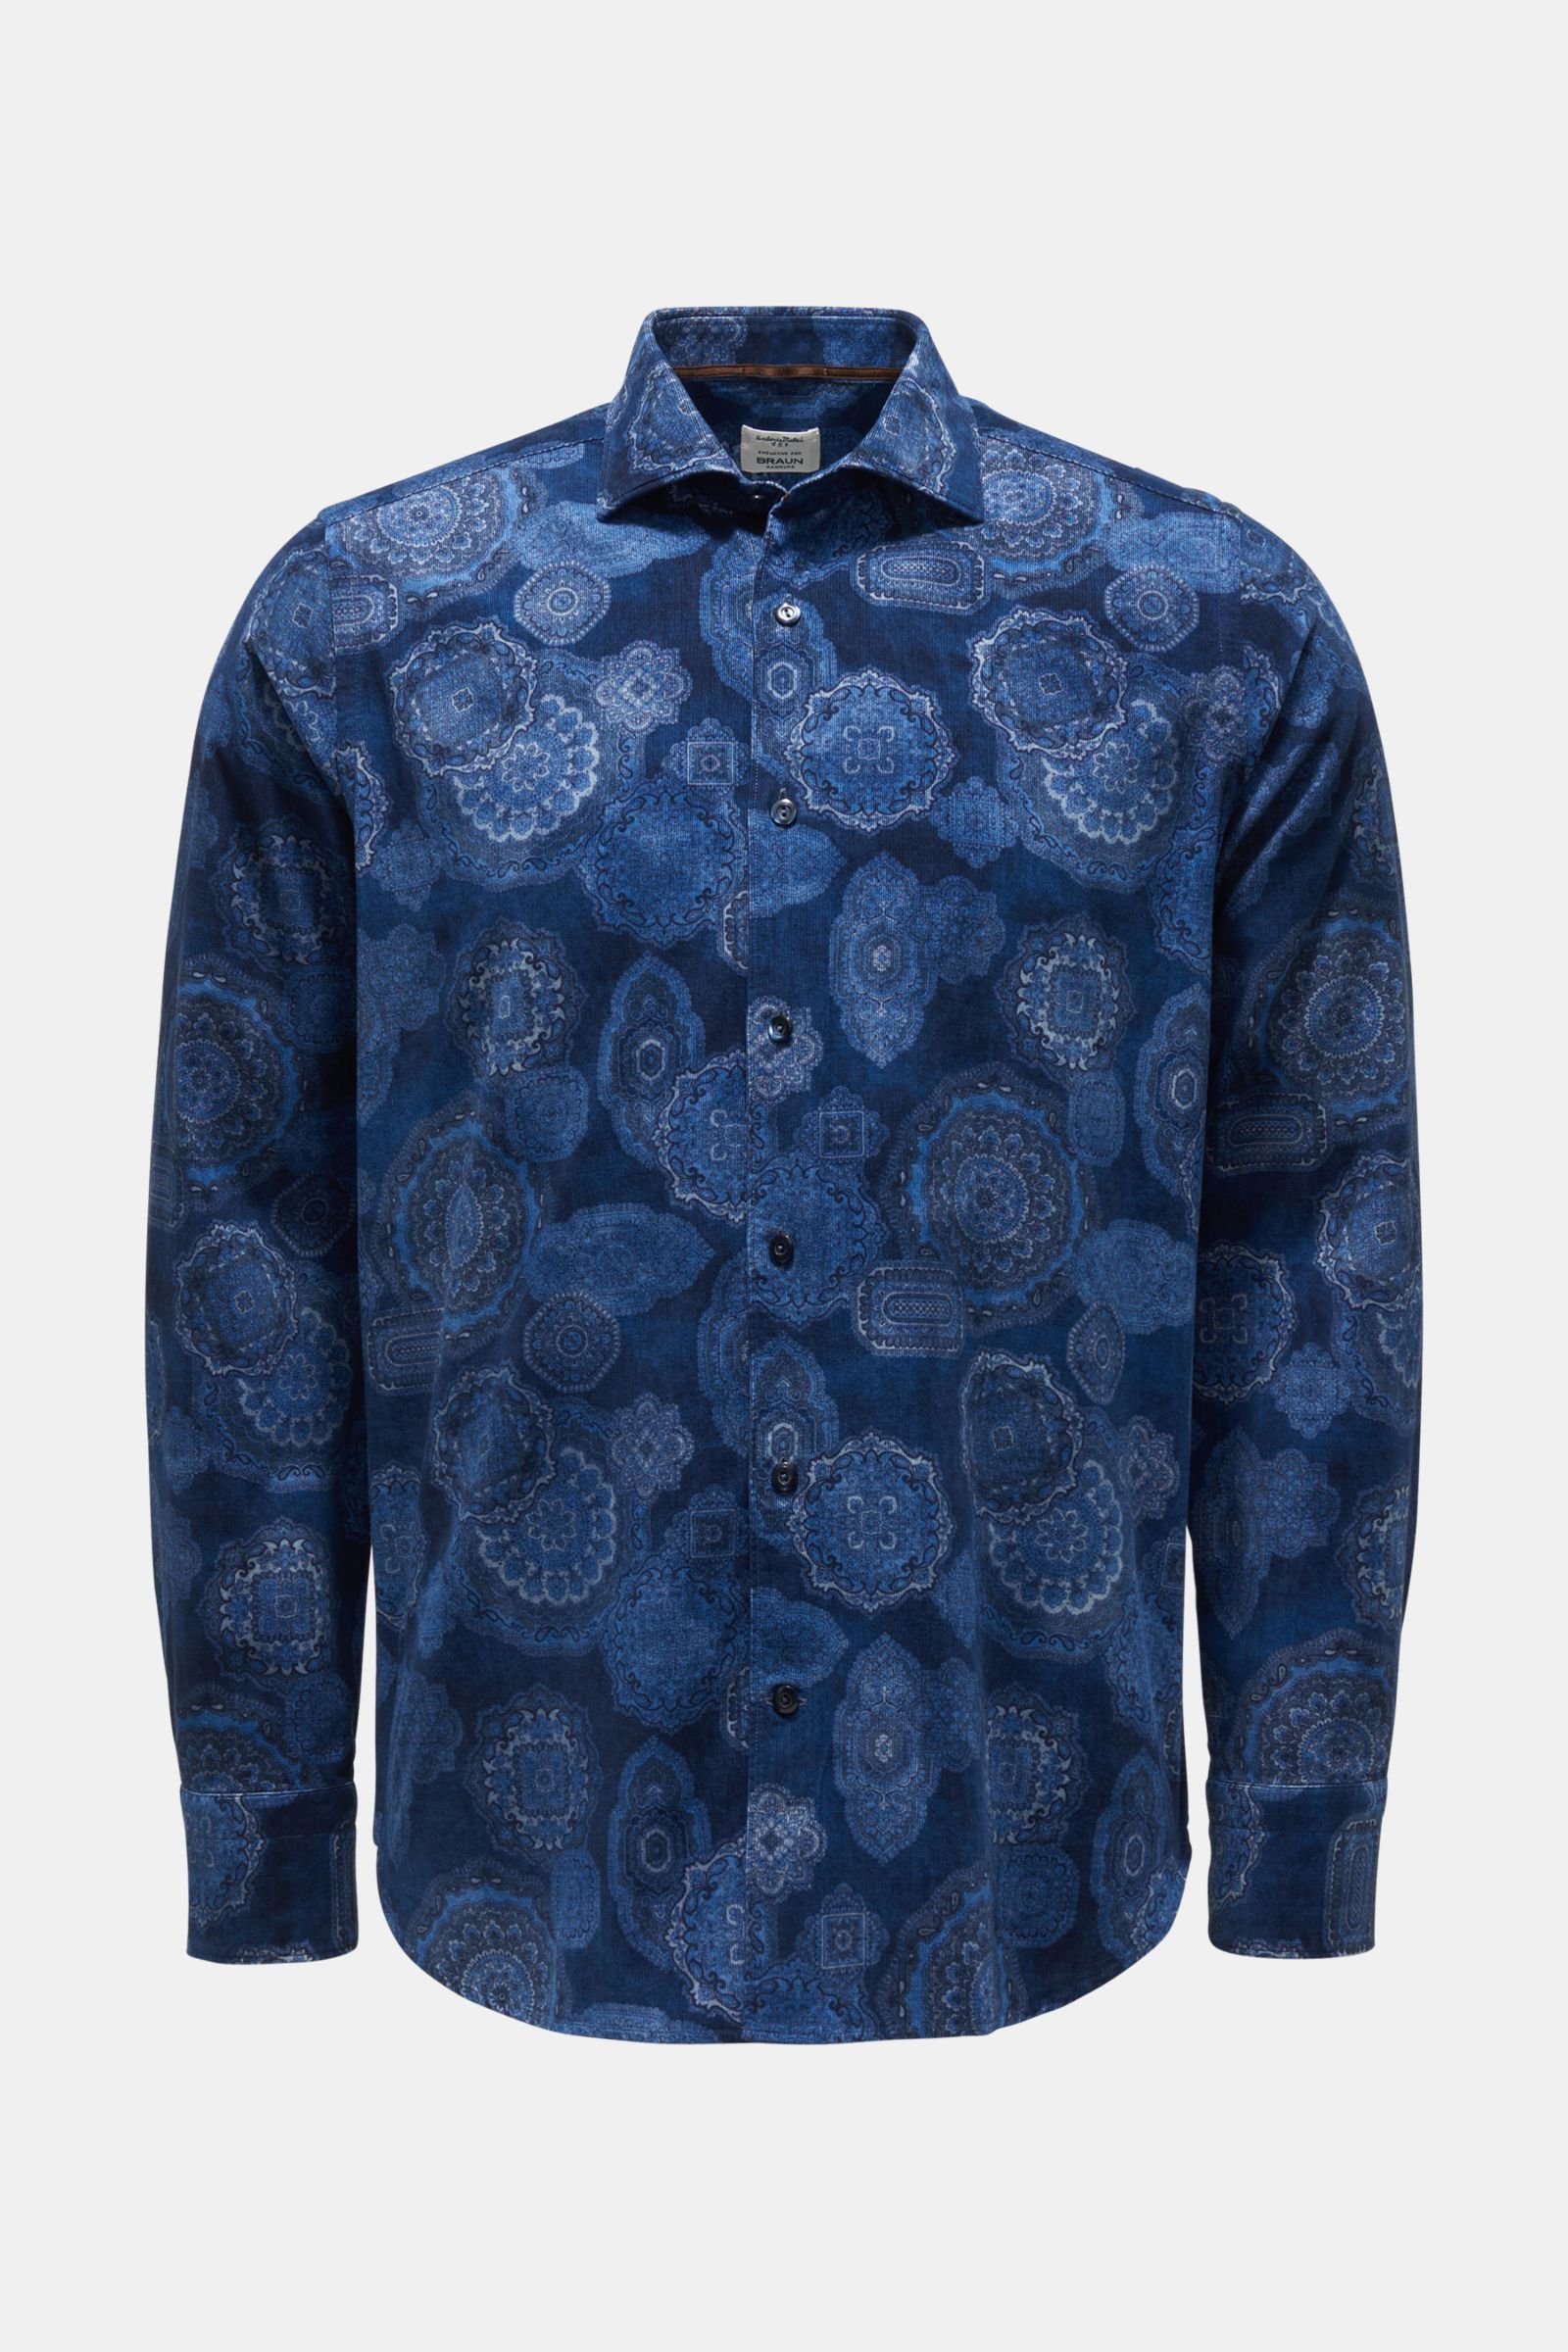 Corduroy shirt shark collar dark blue patterned